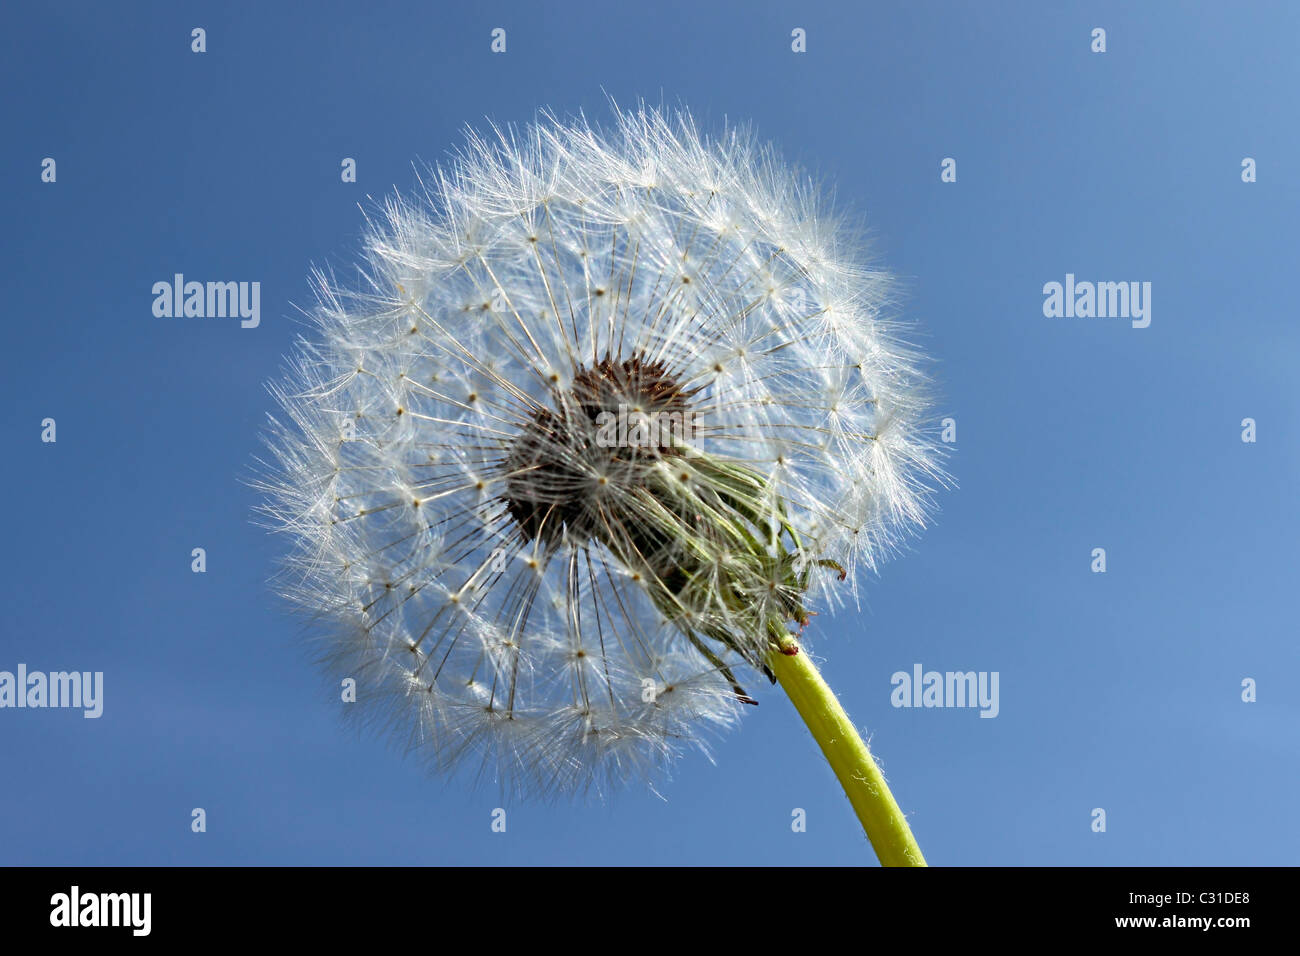 Dandelion seed head against blue sky Stock Photo